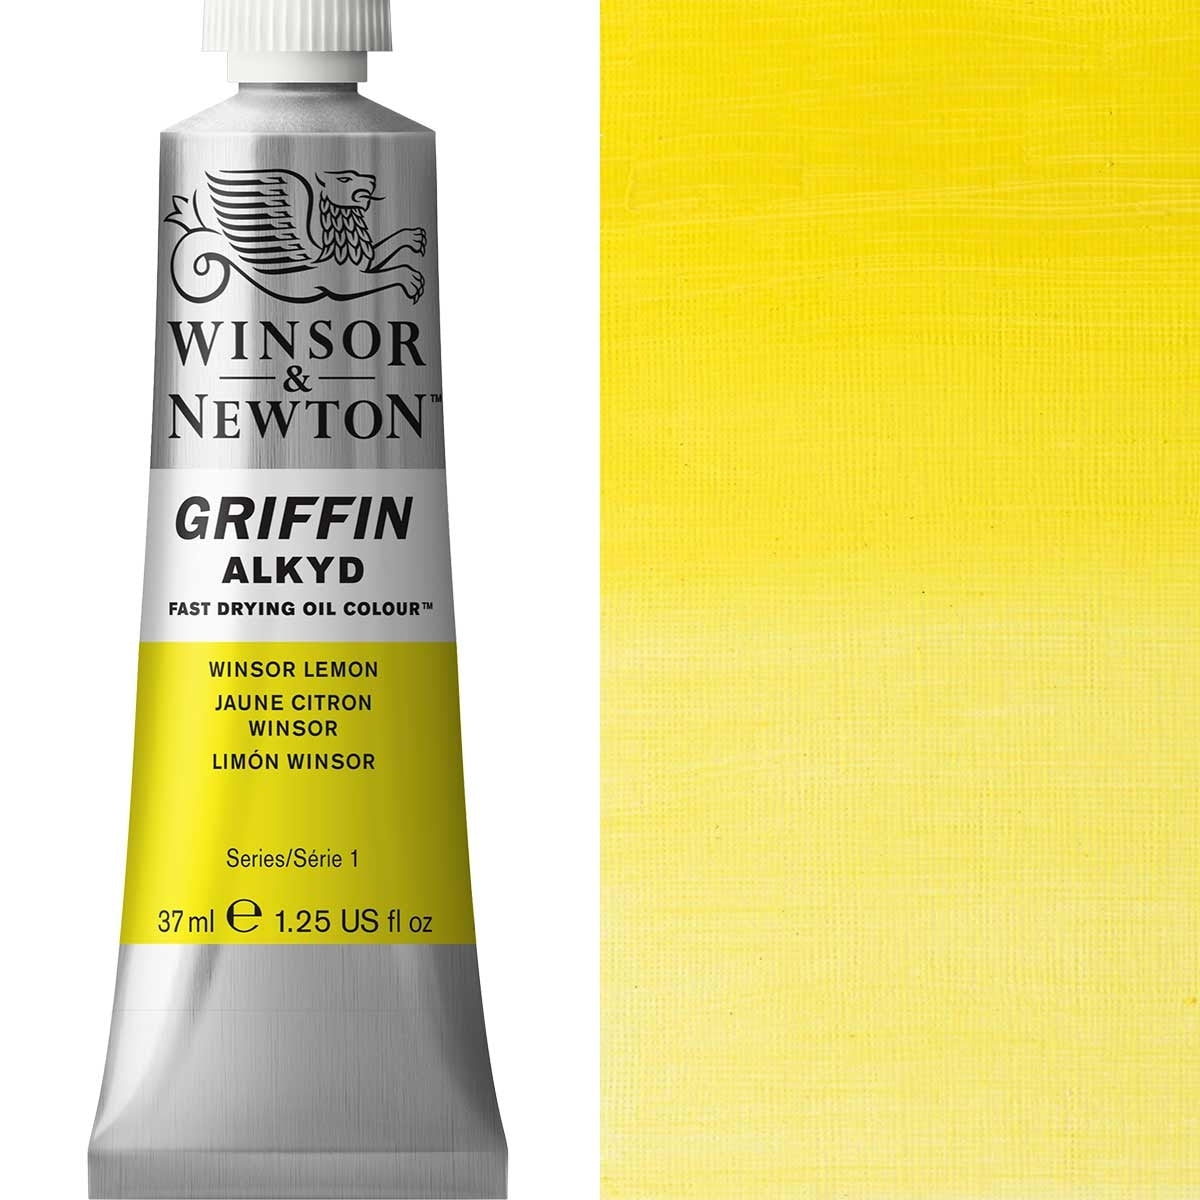 Winsor and Newton - Griffin ALKYD Oil Colour - 37ml - Winsor Lemon